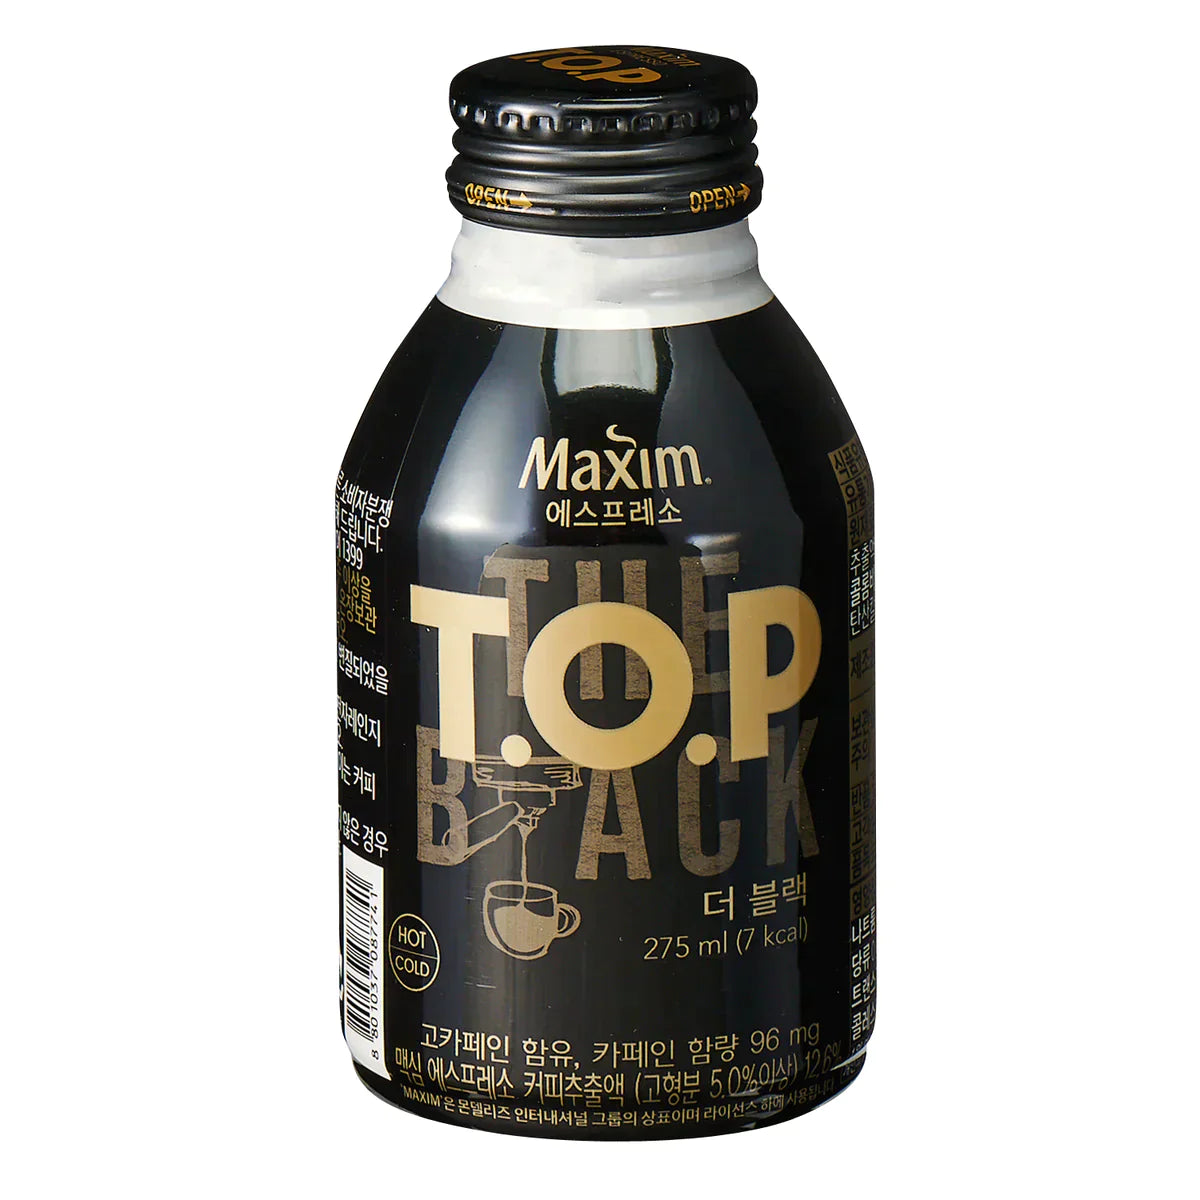 Maxim T.O.P Espresso Black Coffee - The Snacks Box - Asian Snacks Store - The Snacks Box - Korean Snack - Japanese Snack